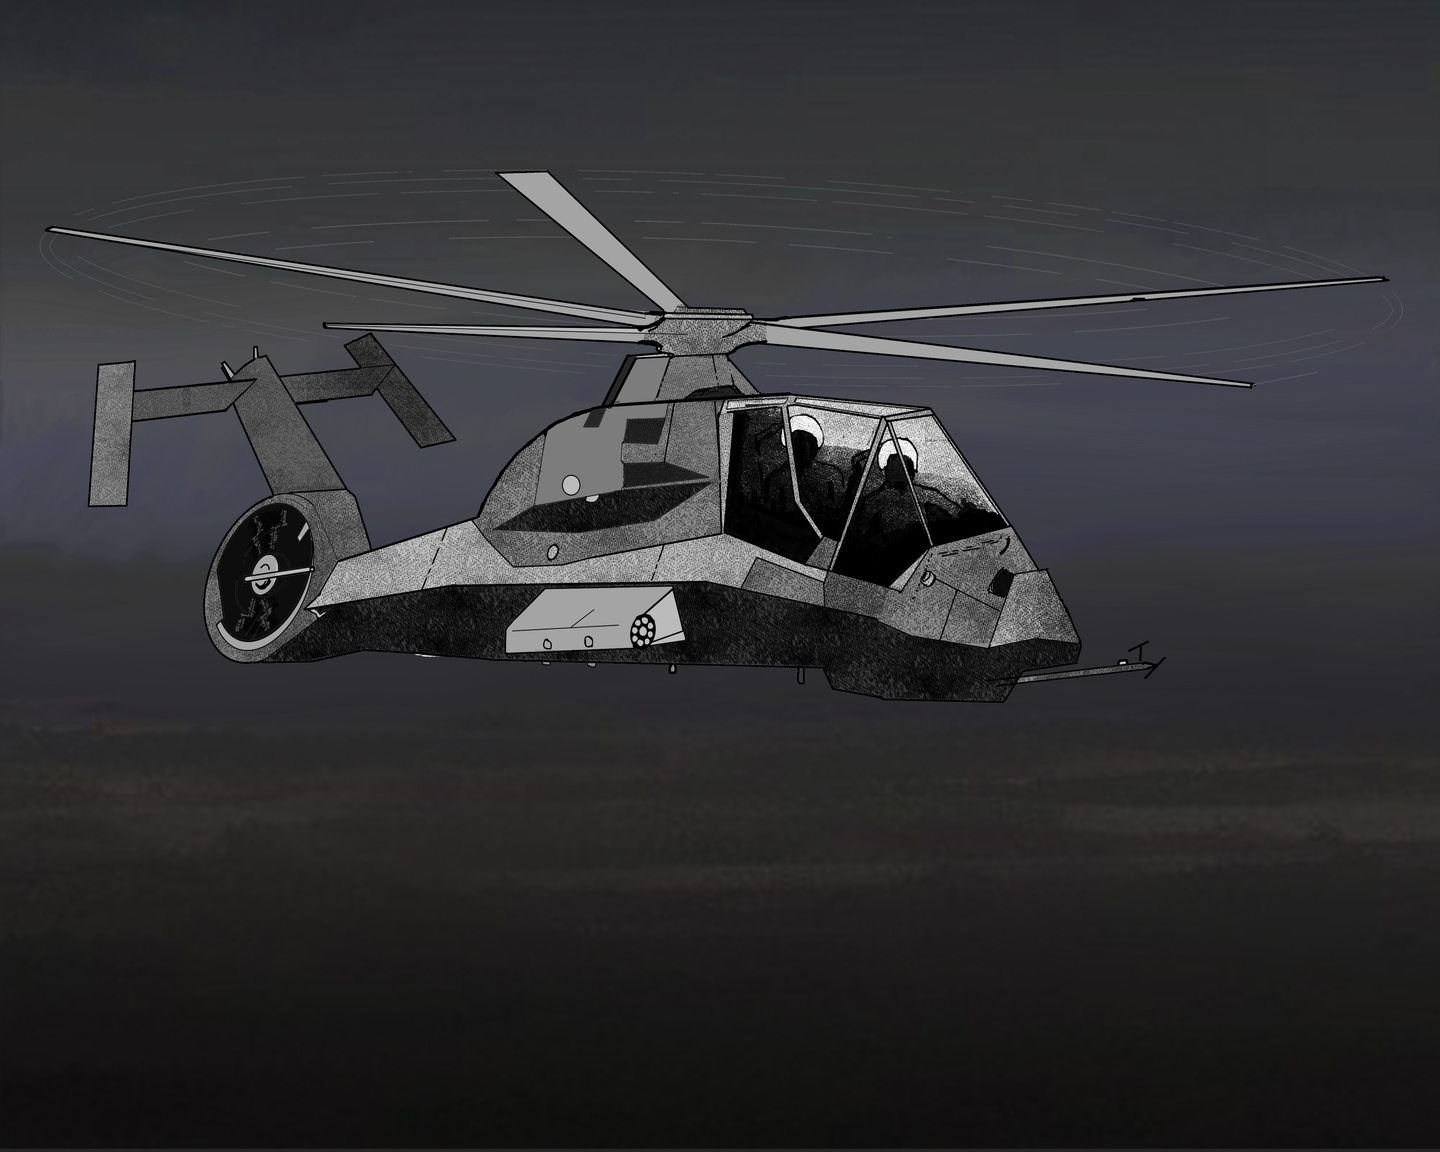 The Hornet chopper in flight